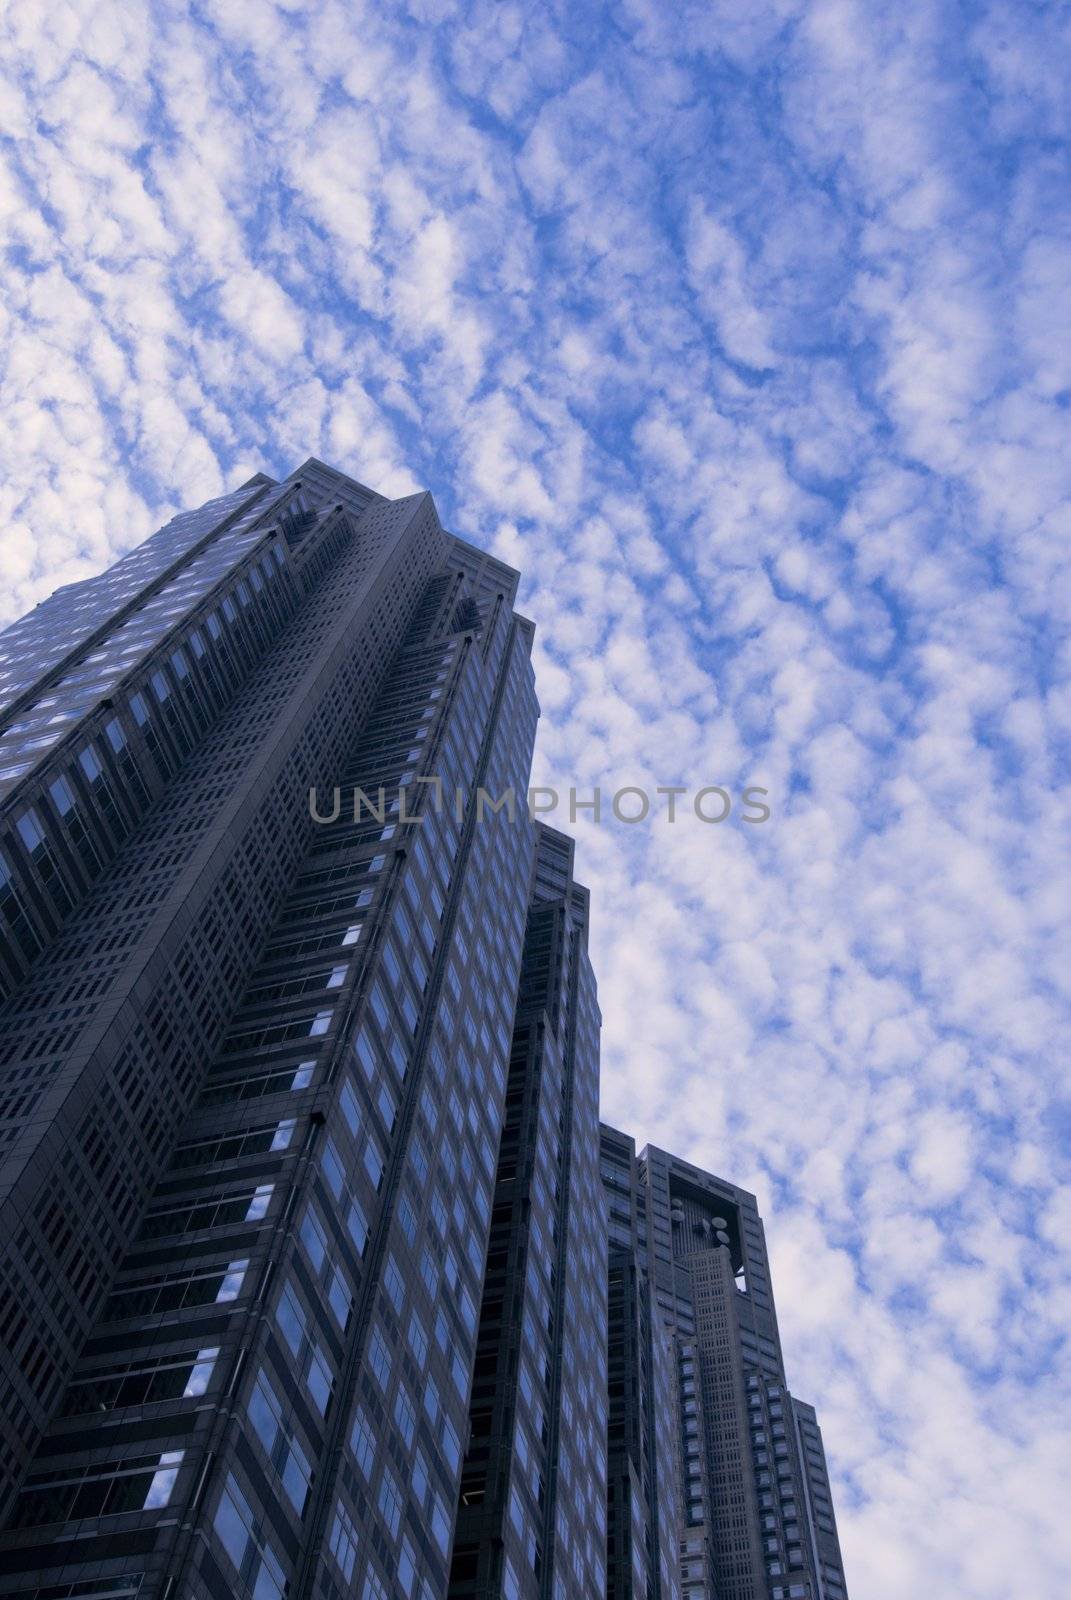 scenic sky over Tokyo City Hall building in Shinjuku district, Japan